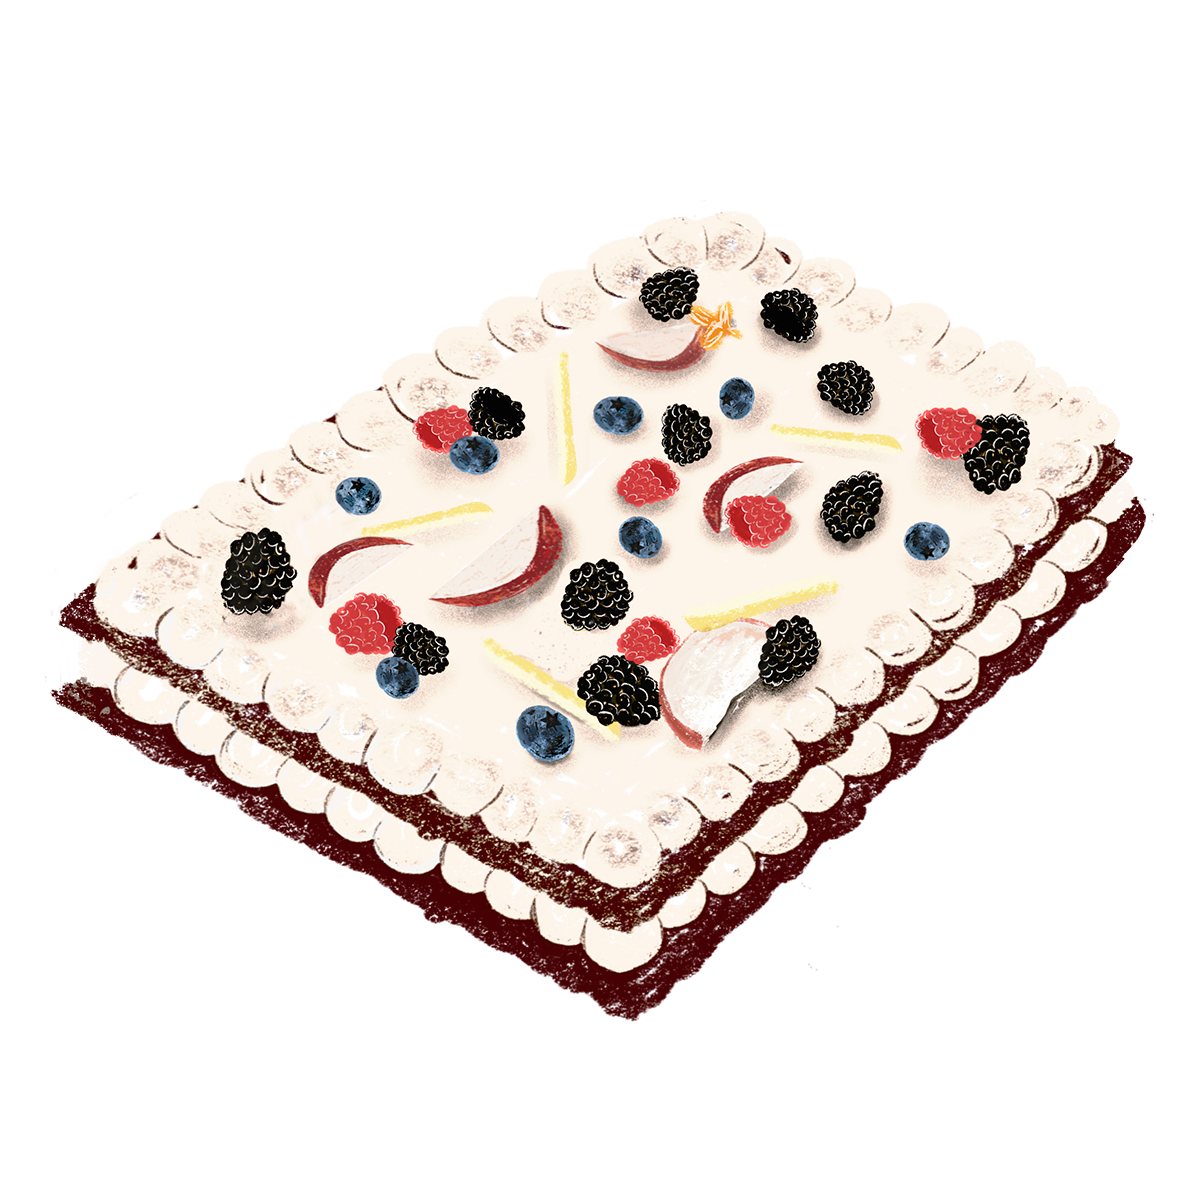 CELEBRATION CAKE (40cm)